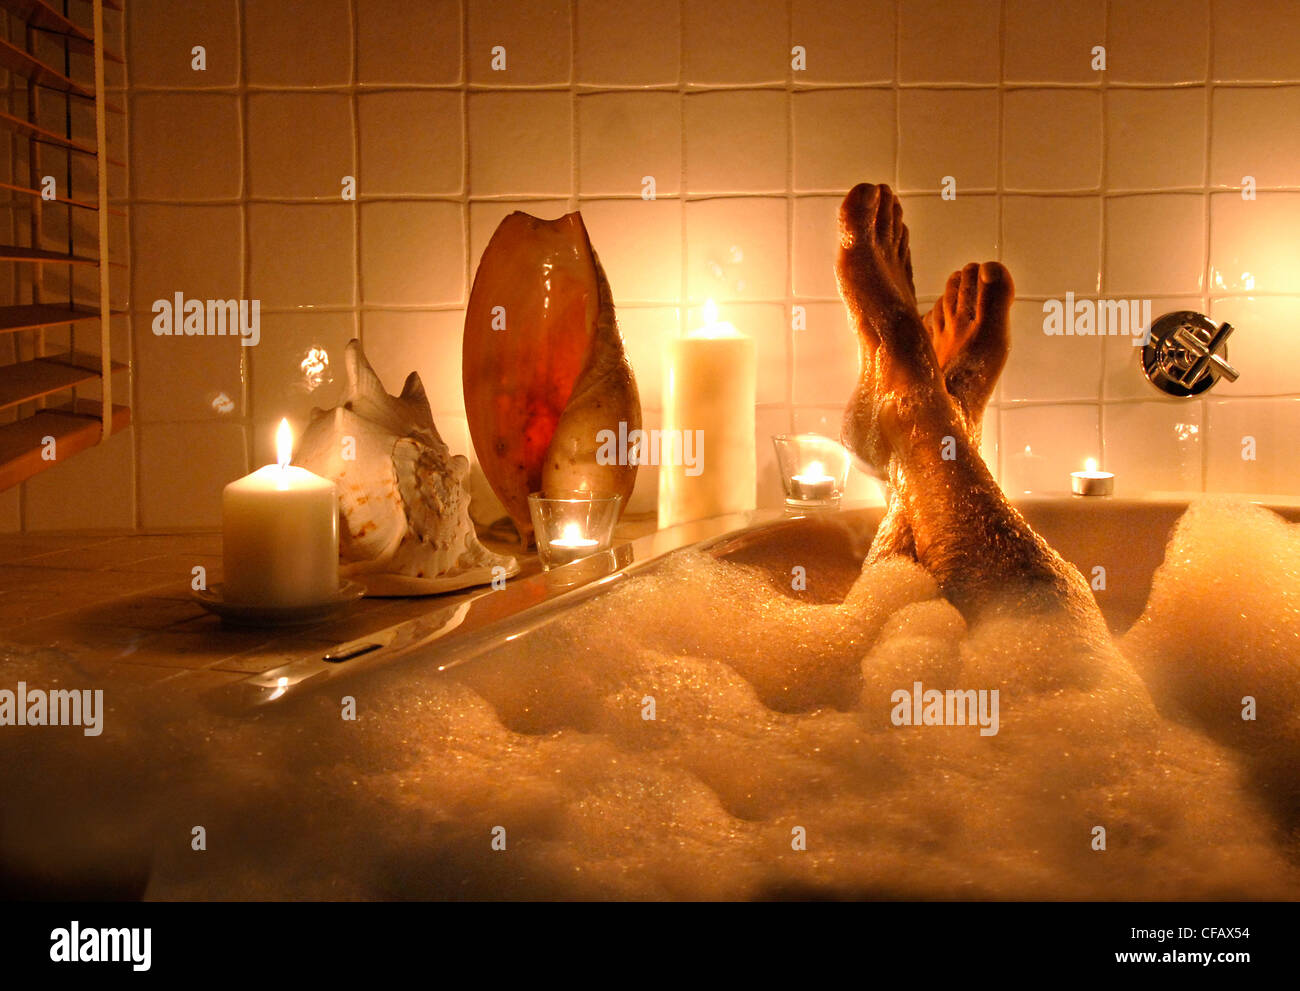 Bathtub in modern bathroom with candles · Free Stock Photo